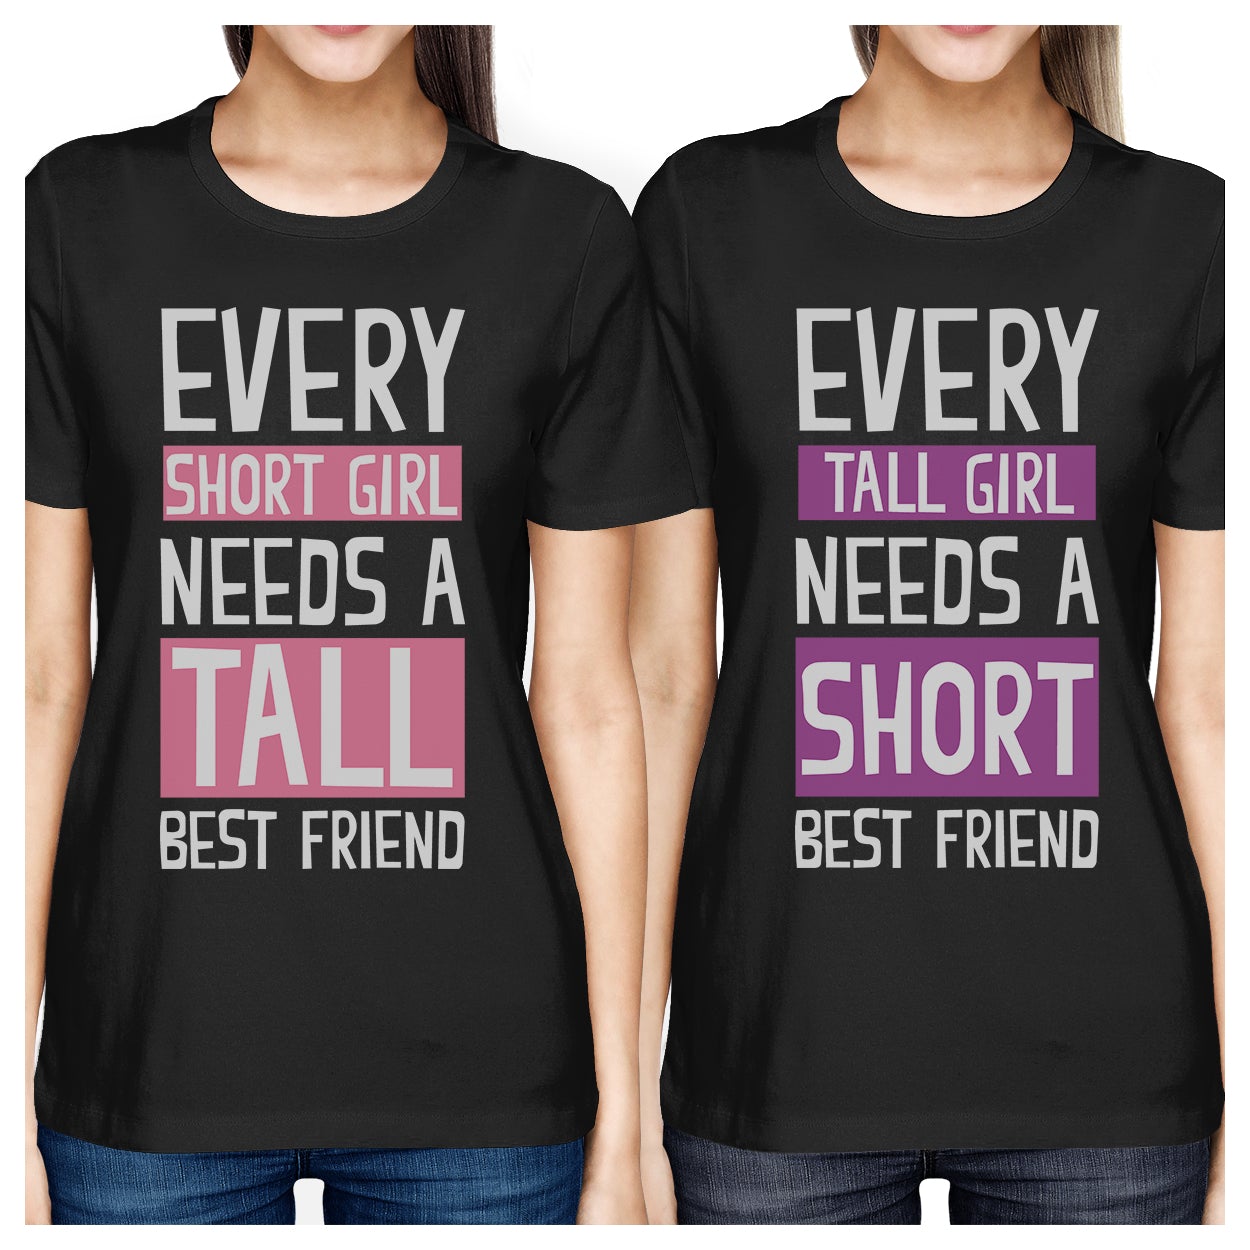 Best Friend Shirts - Short and Tall Best Friends BFF Matching T-shirts Black